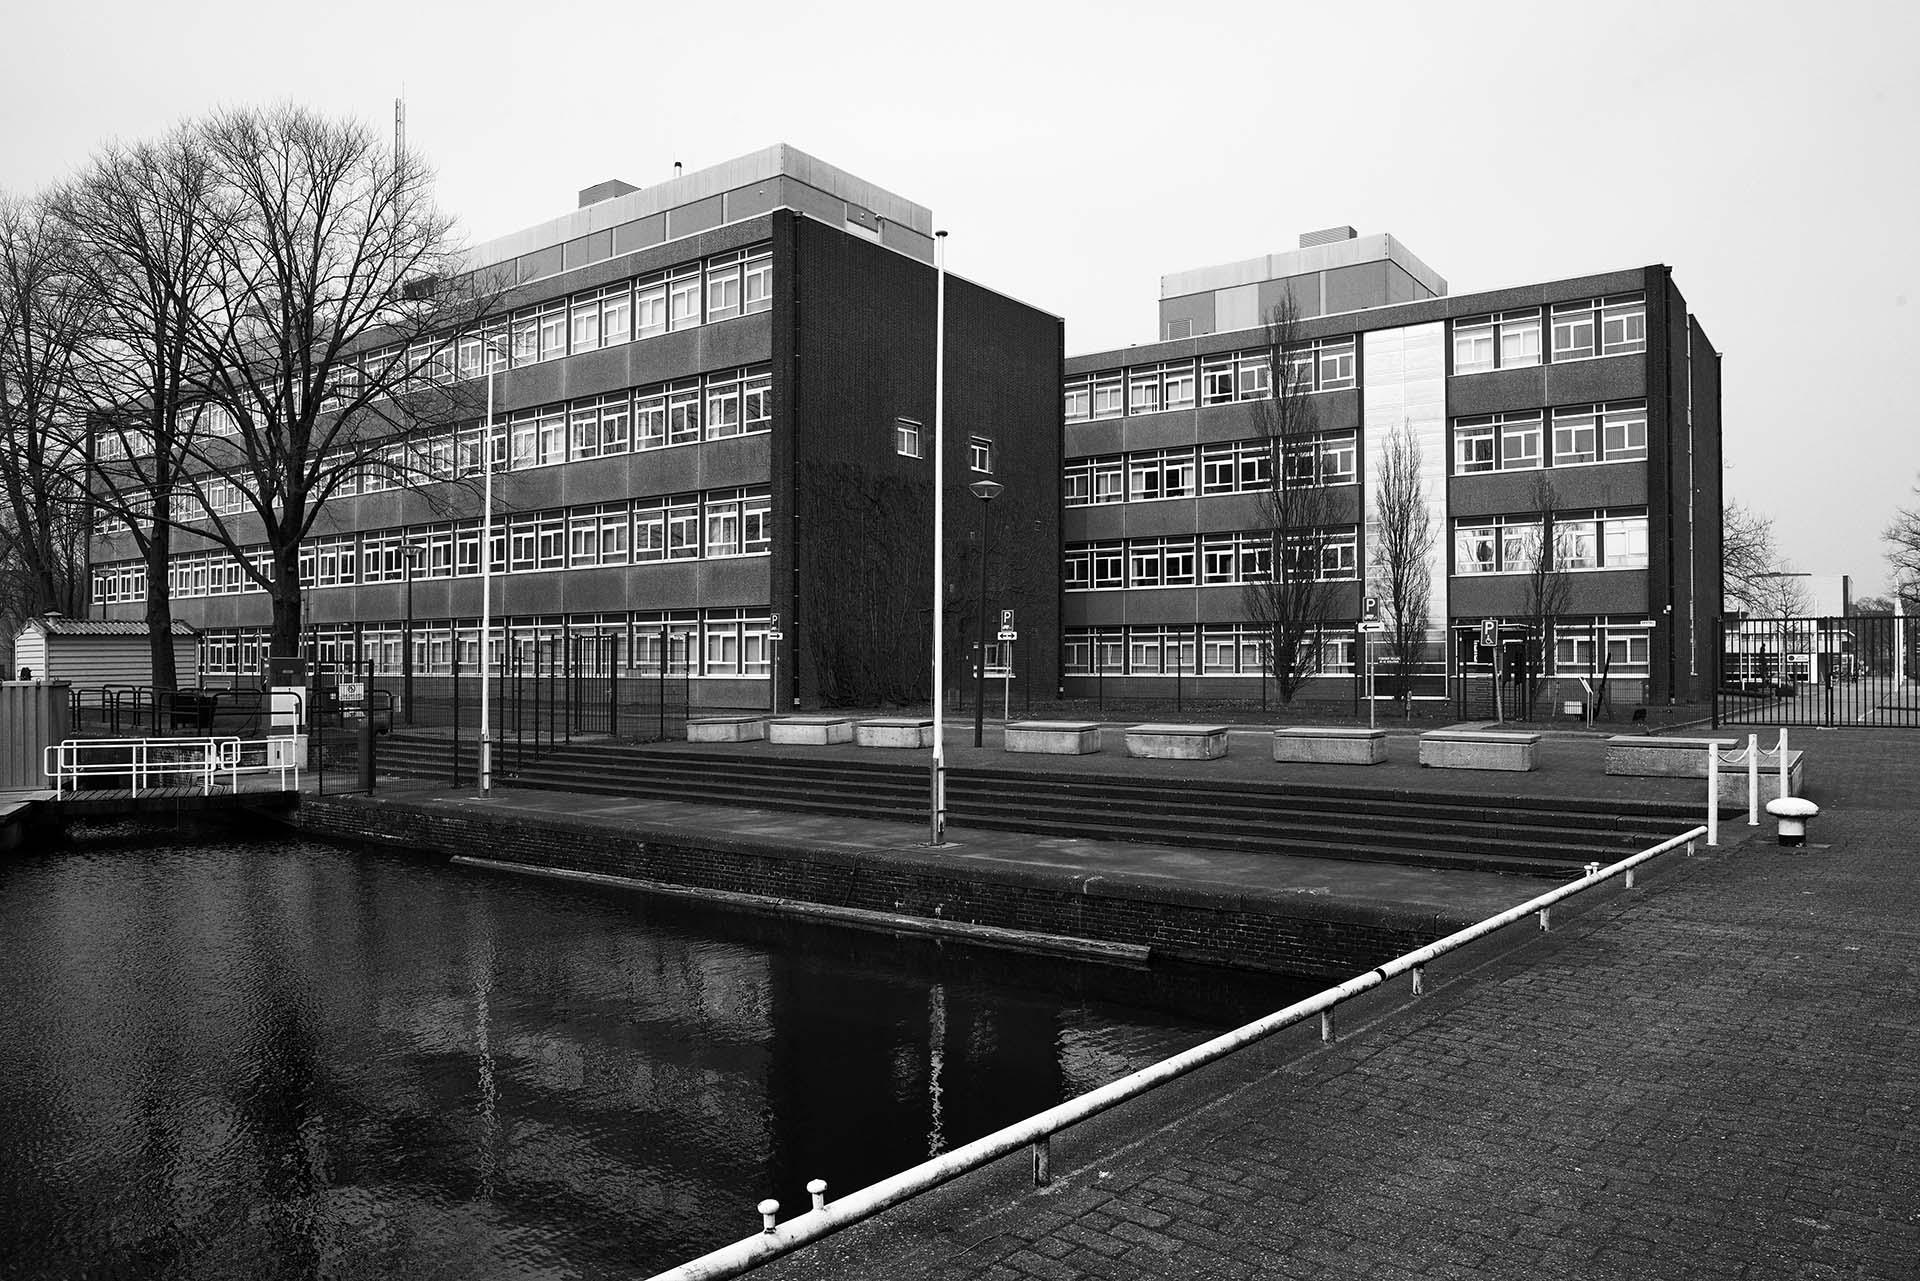 Canal near modern buildings on street